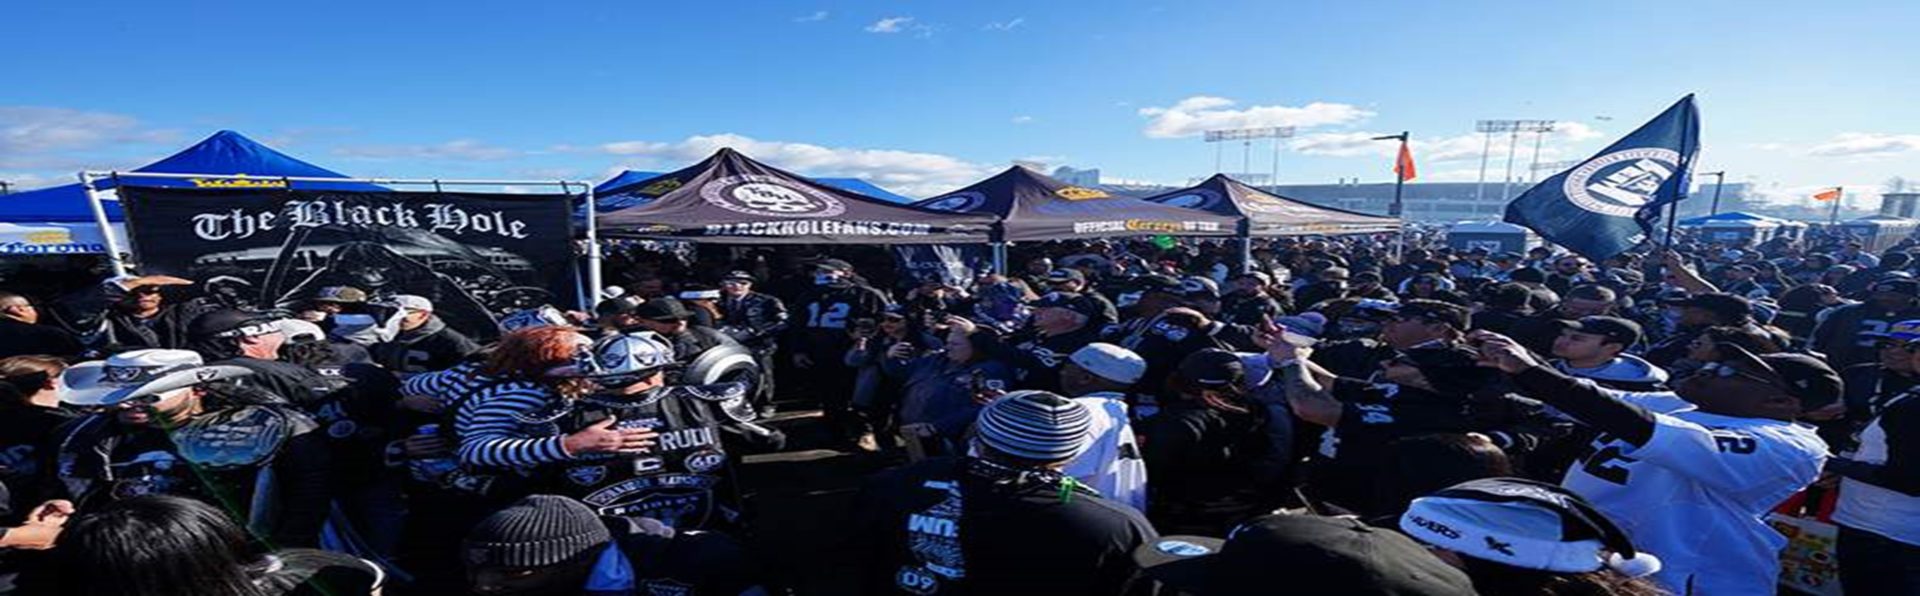 Las Vegas Raiders Fans Tailgating